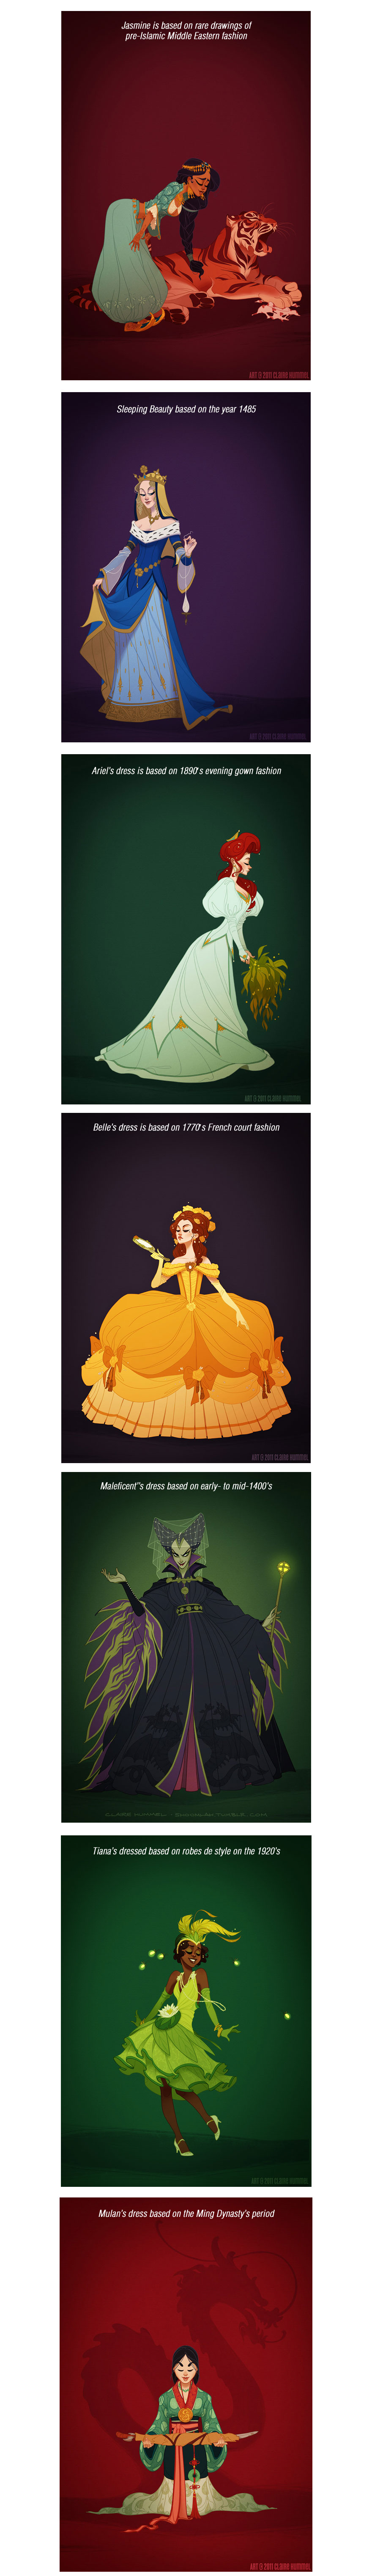 cool-Disney-princesses-period-costume-Cinderella